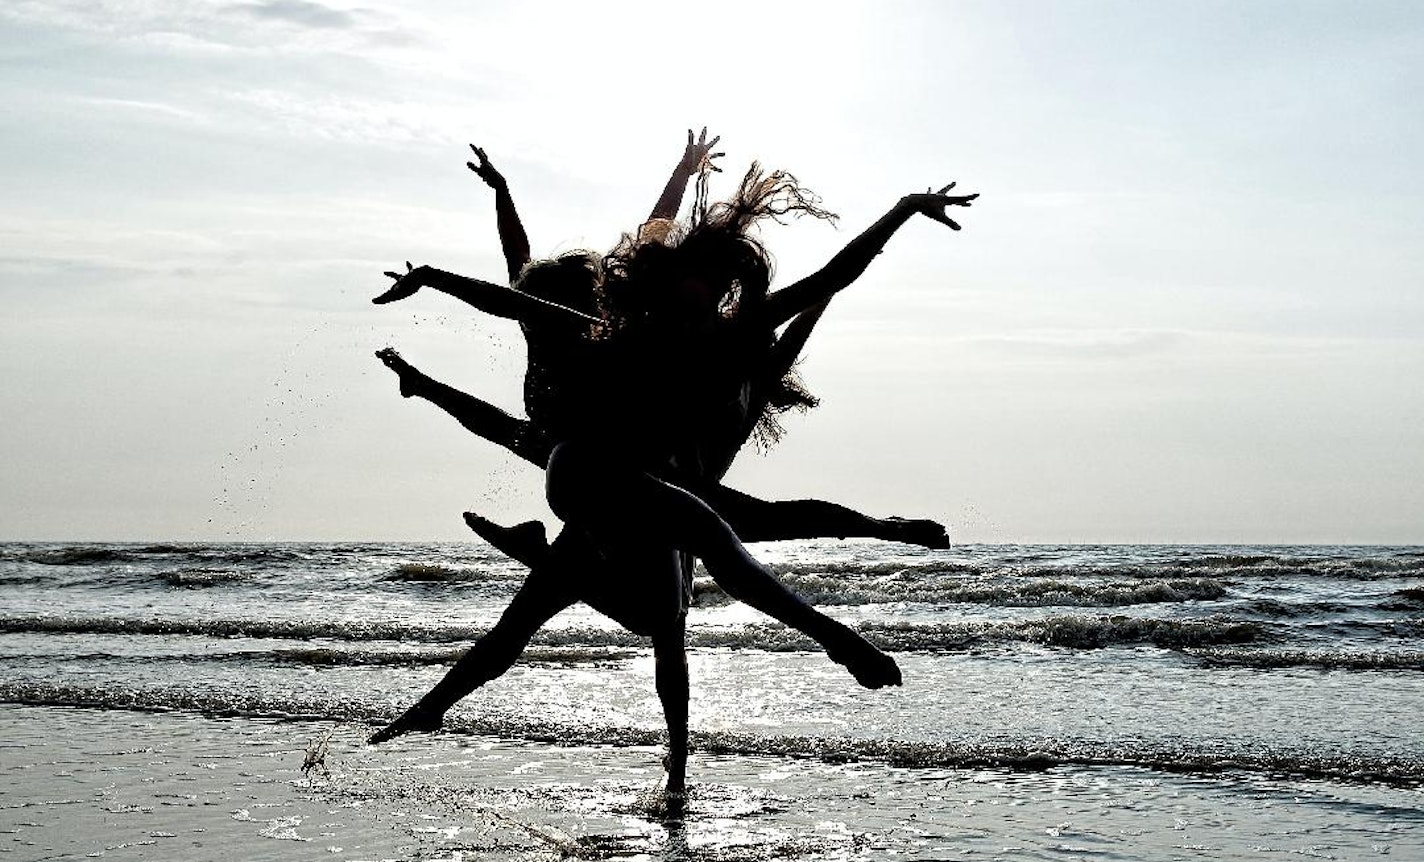 Creating Balance Through Dance and Ritual